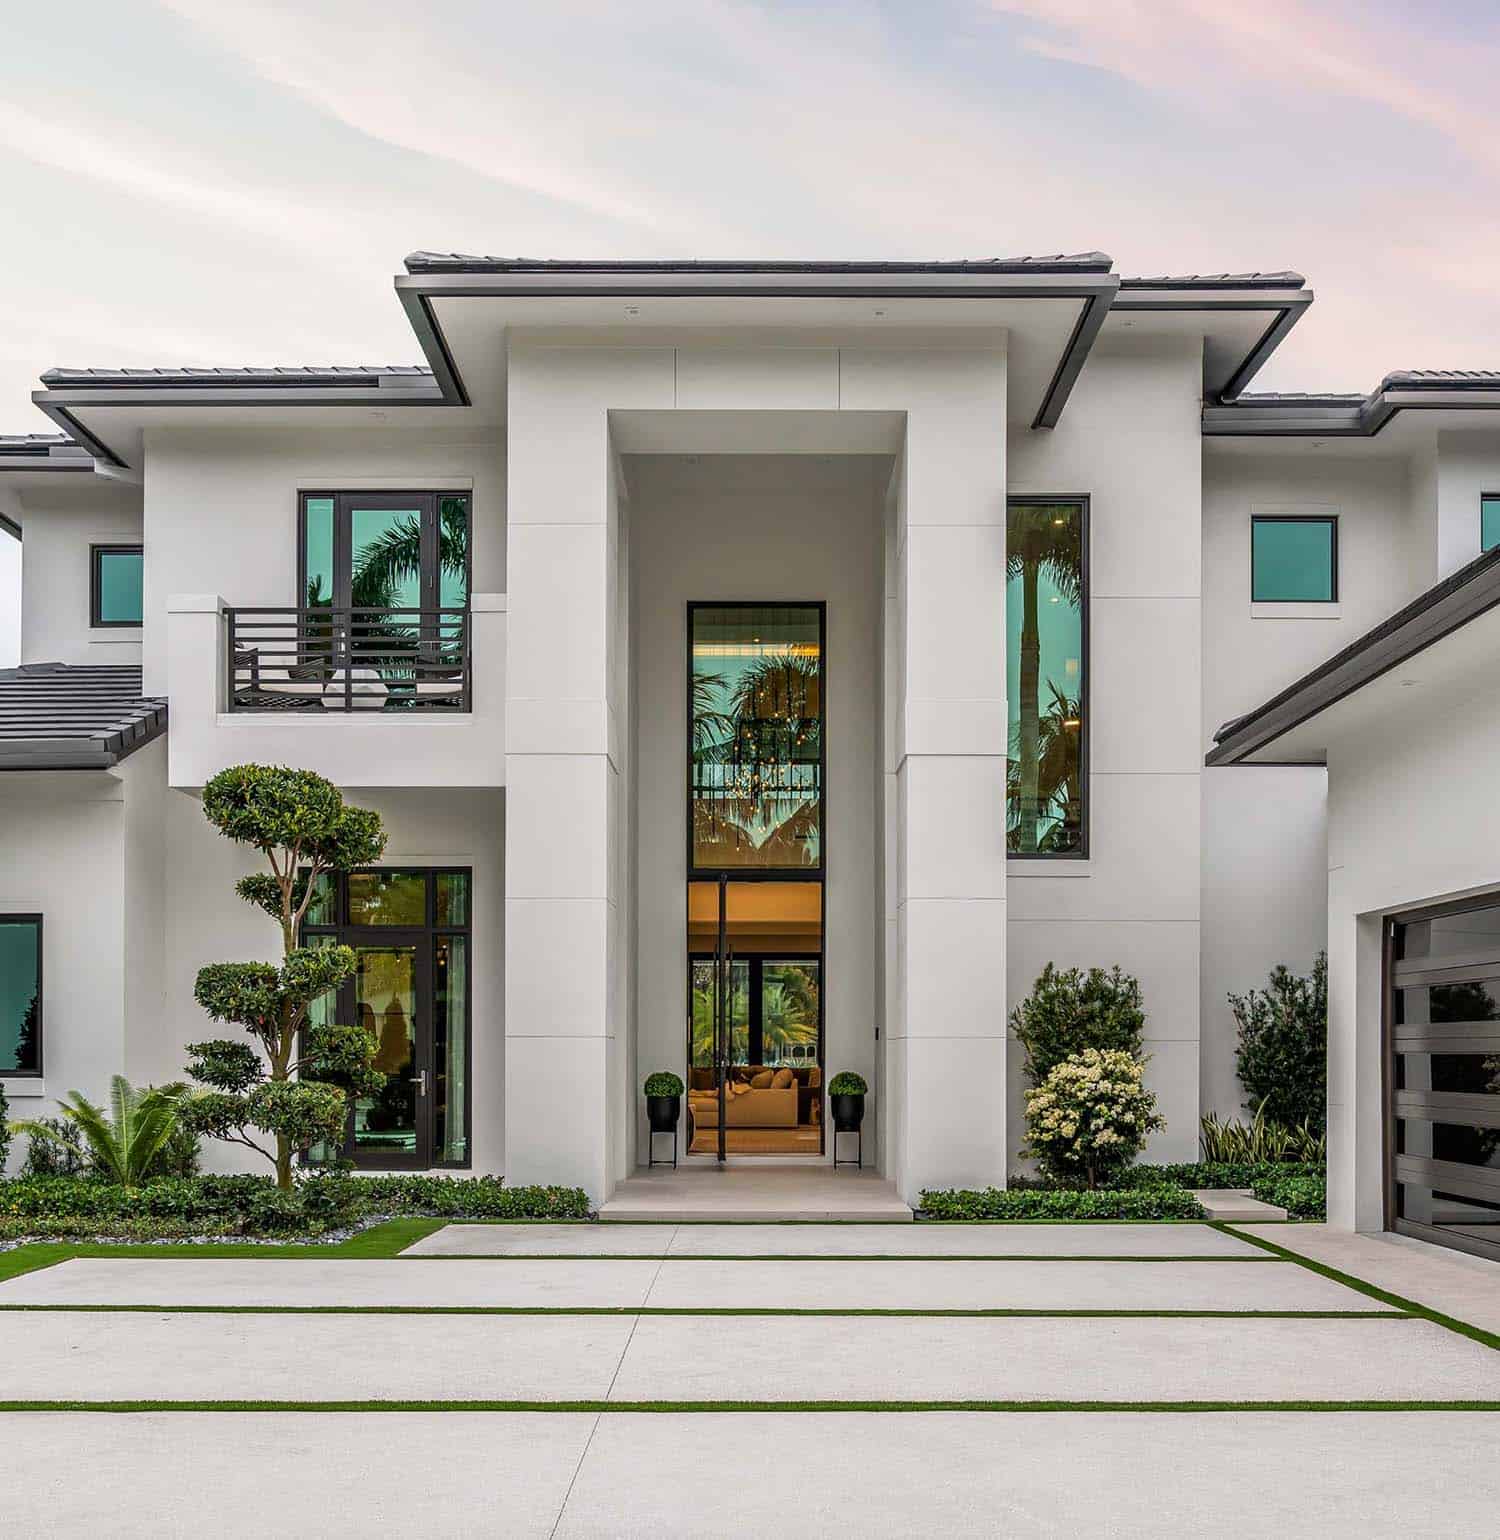 California modern style home exterior